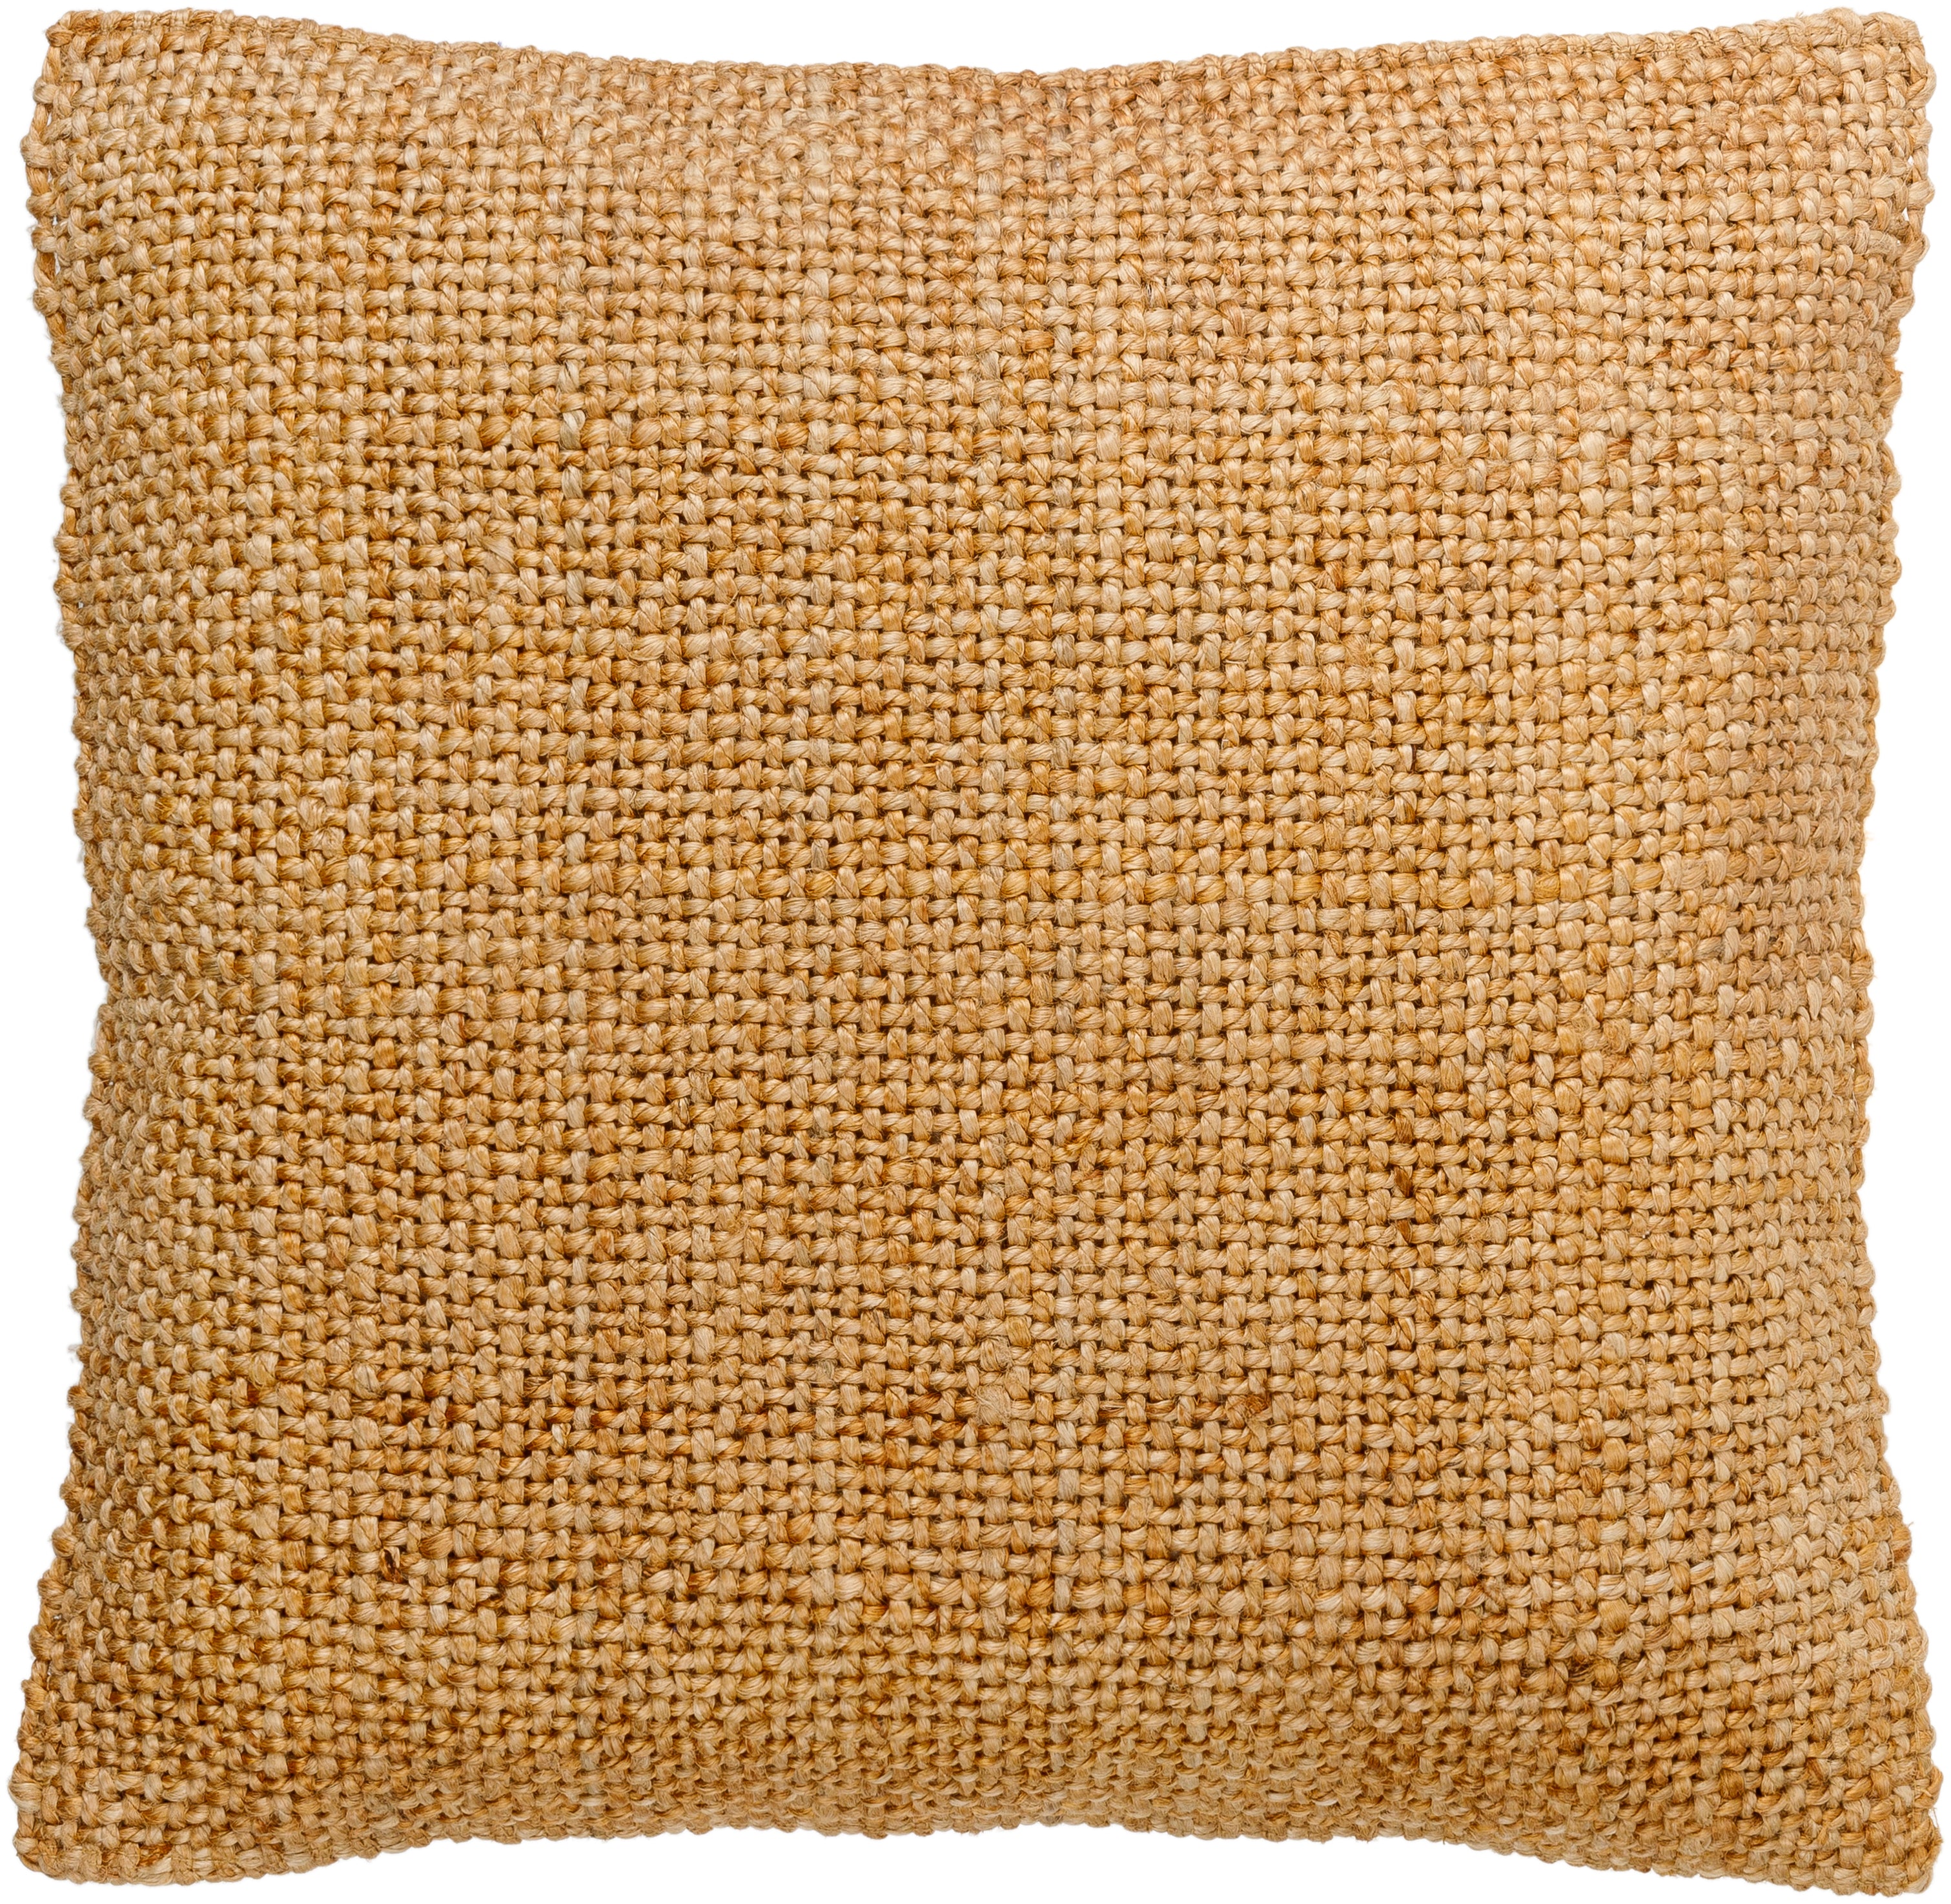 Meerut Pillow